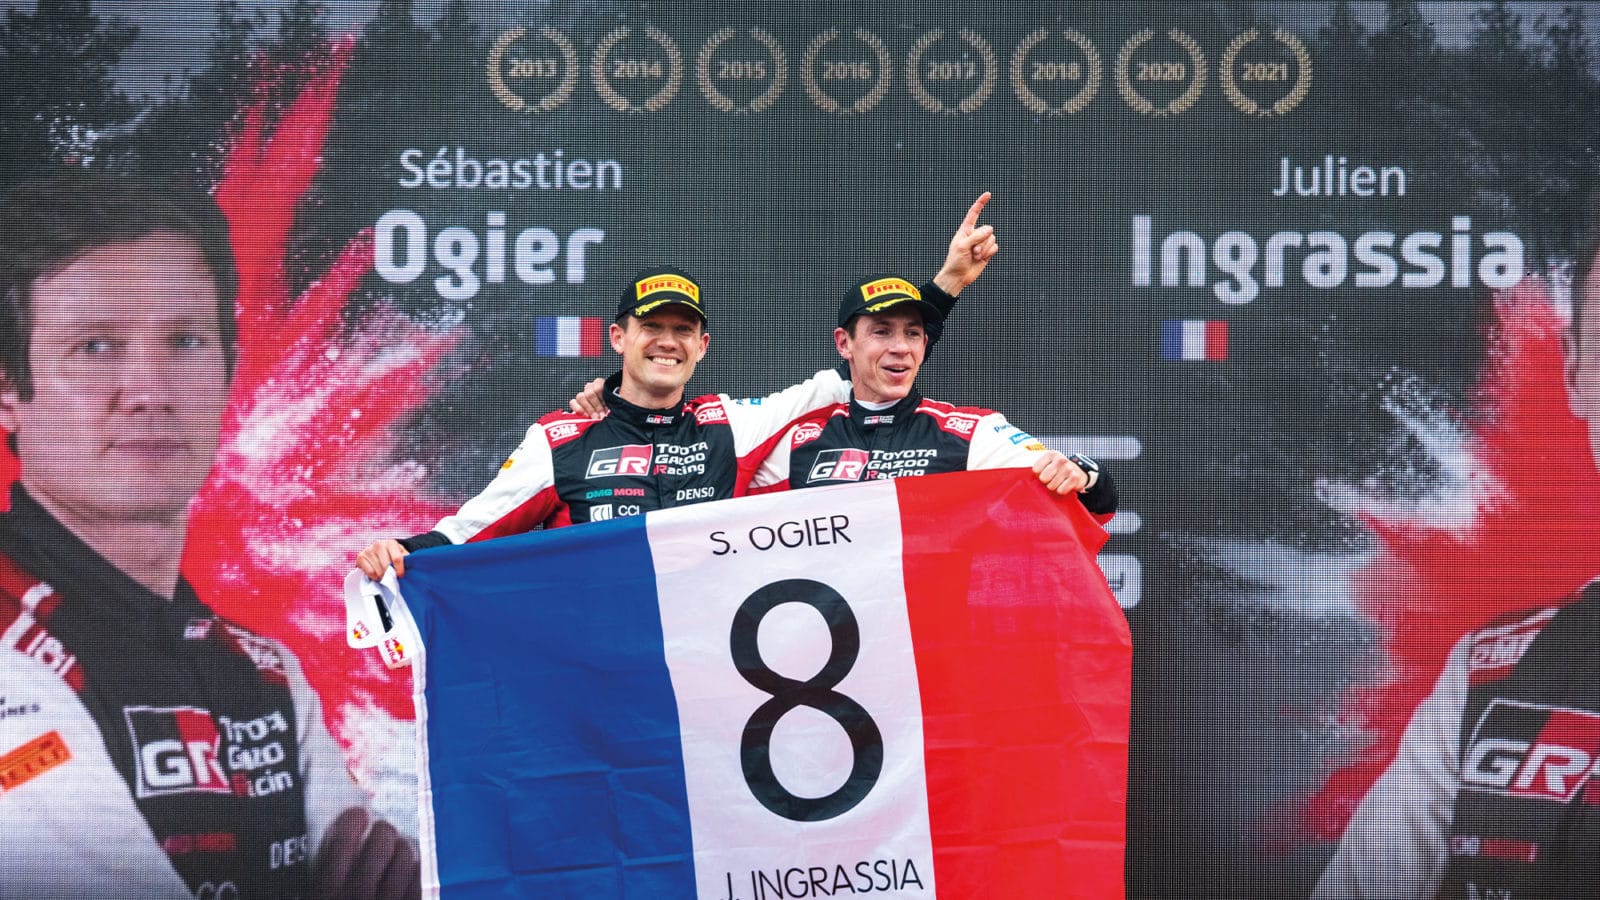 Sebastien Ogier and Julien Ingrassia celebrate winning the 2021 WRC title